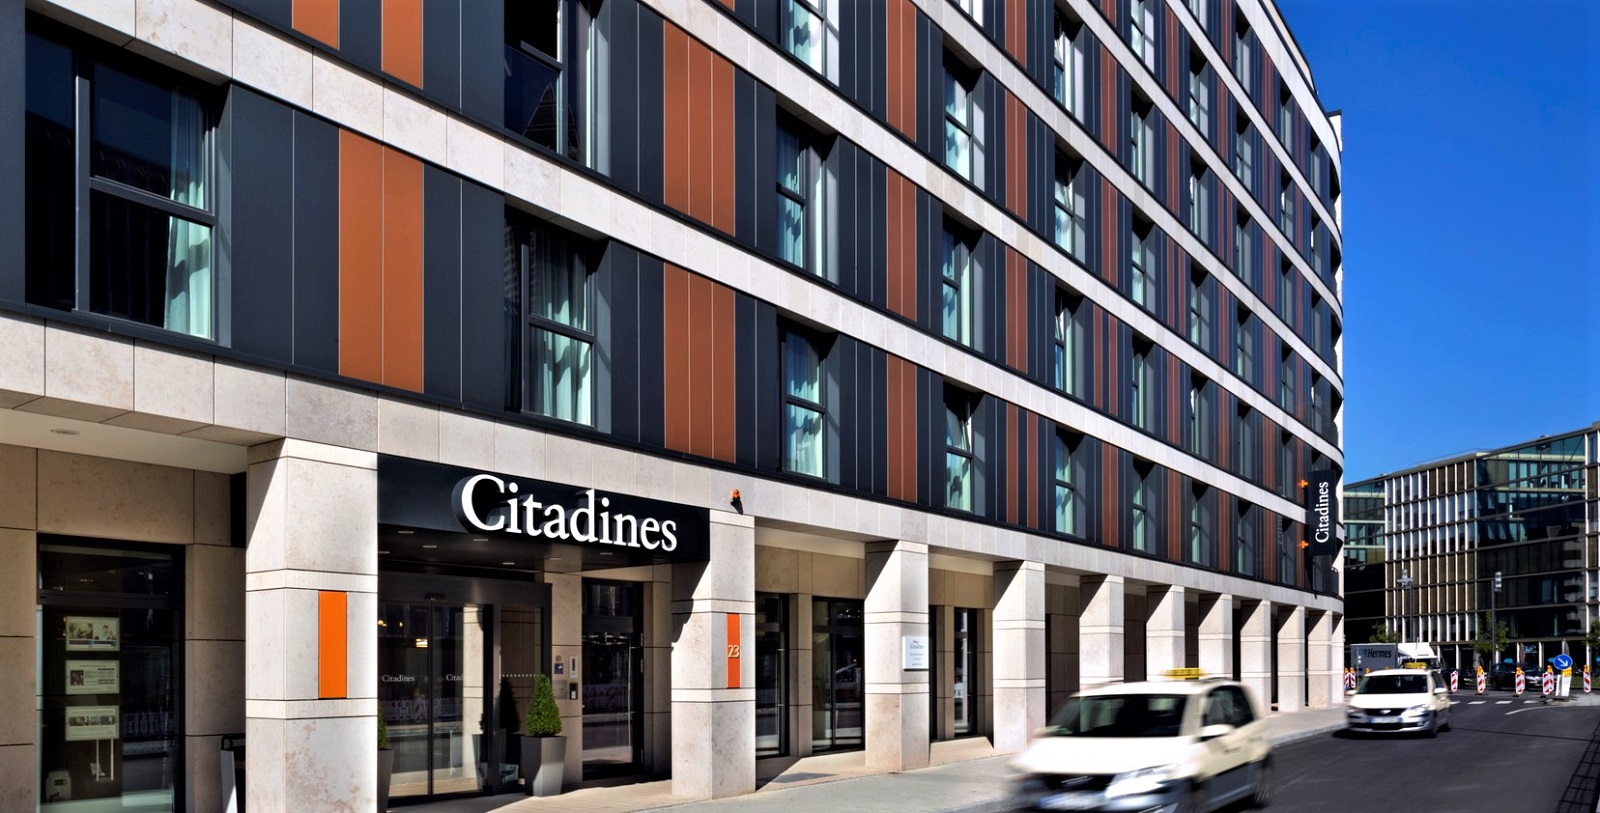 Citadines City Centre Frankfurt Apartment-Hotel, Germany